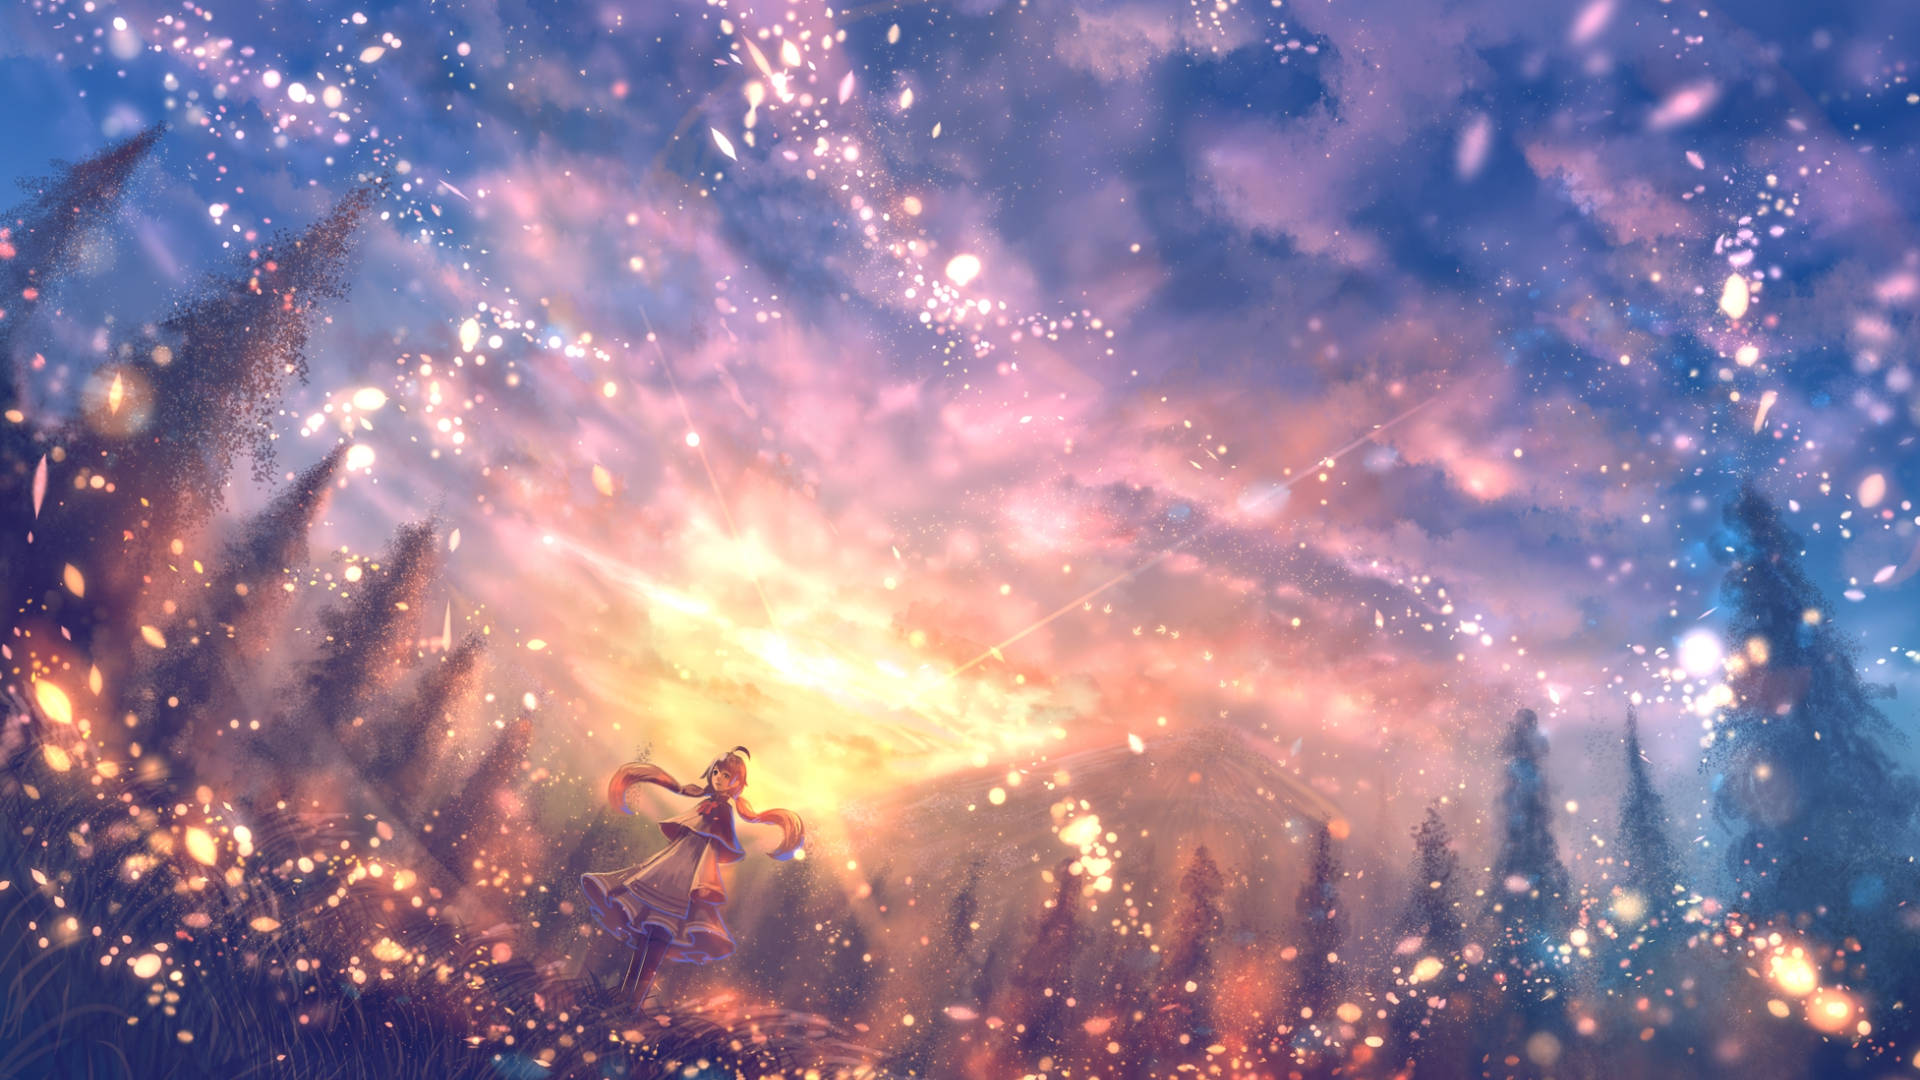 Beautiful Anime Magical Sunset Background